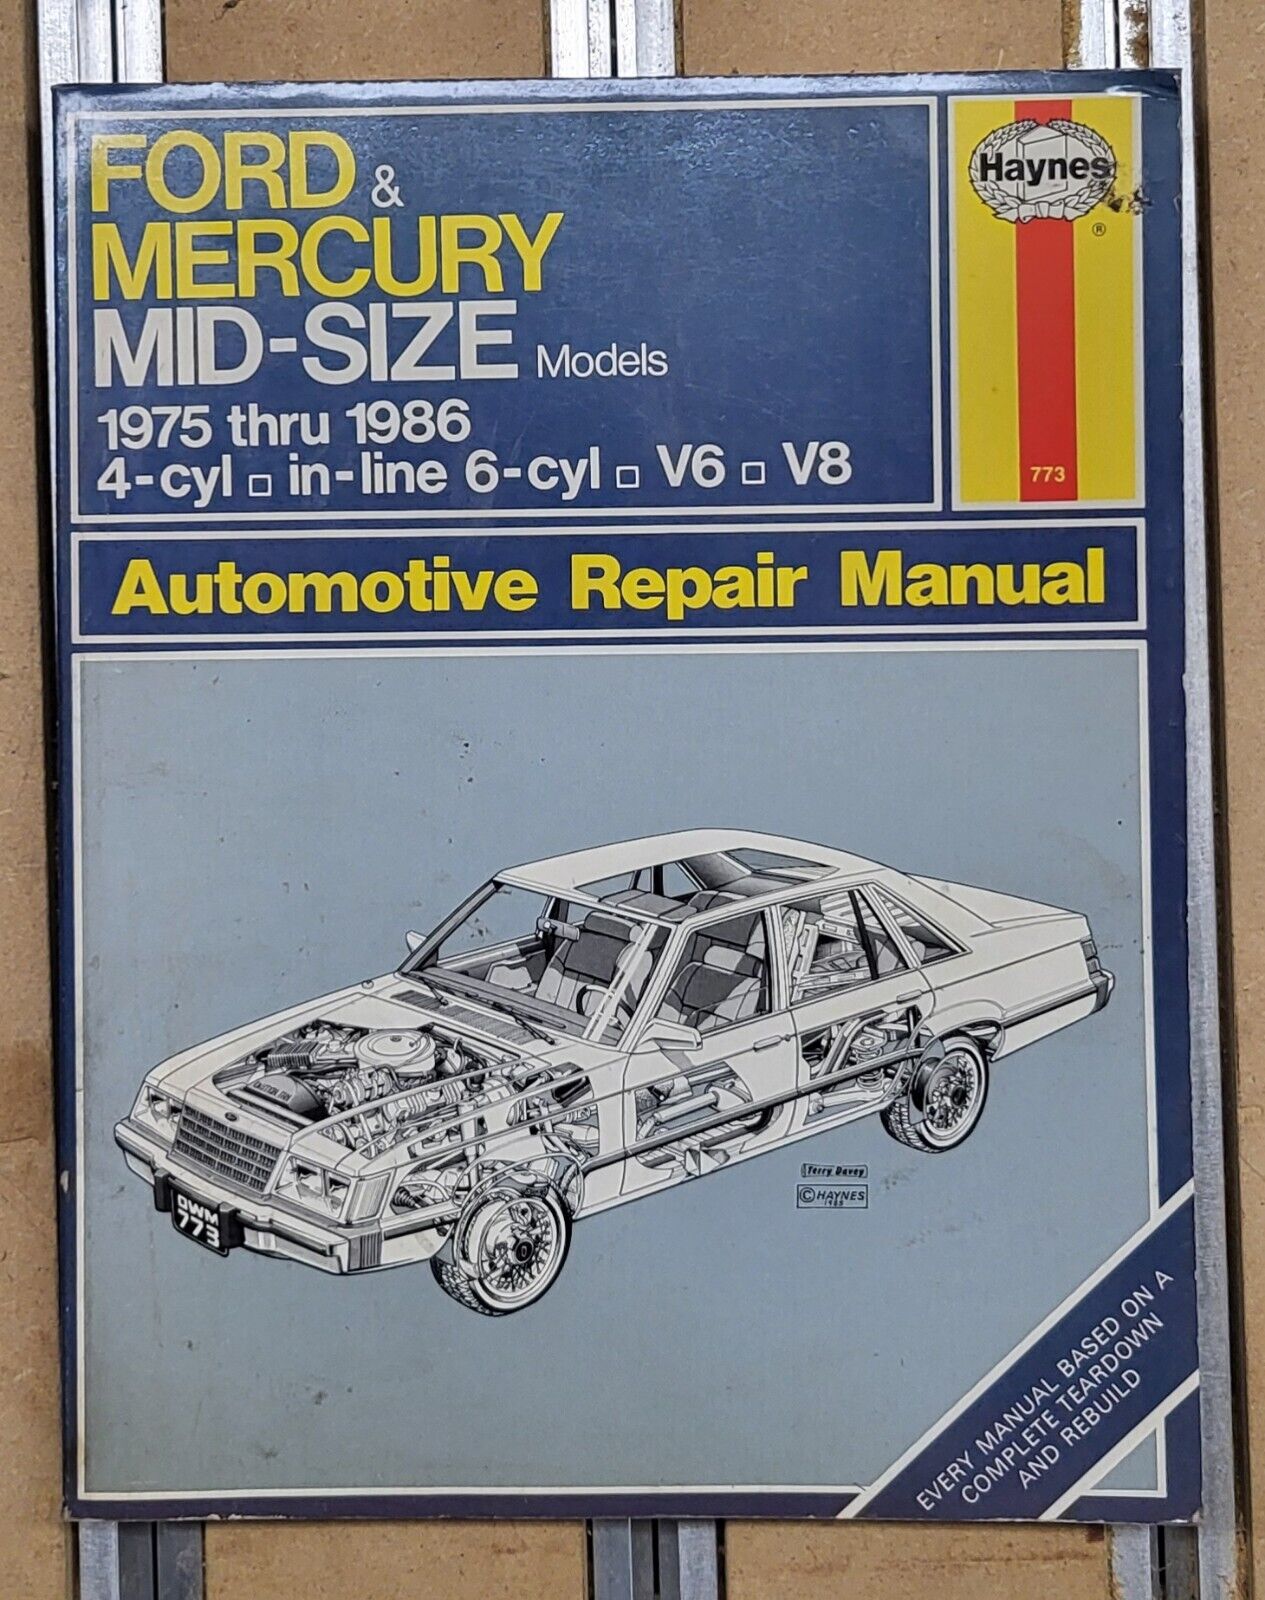 Haynes Ford & Mercury Mid Size Models 1975-1986 Owners Workshop Manual Book 773